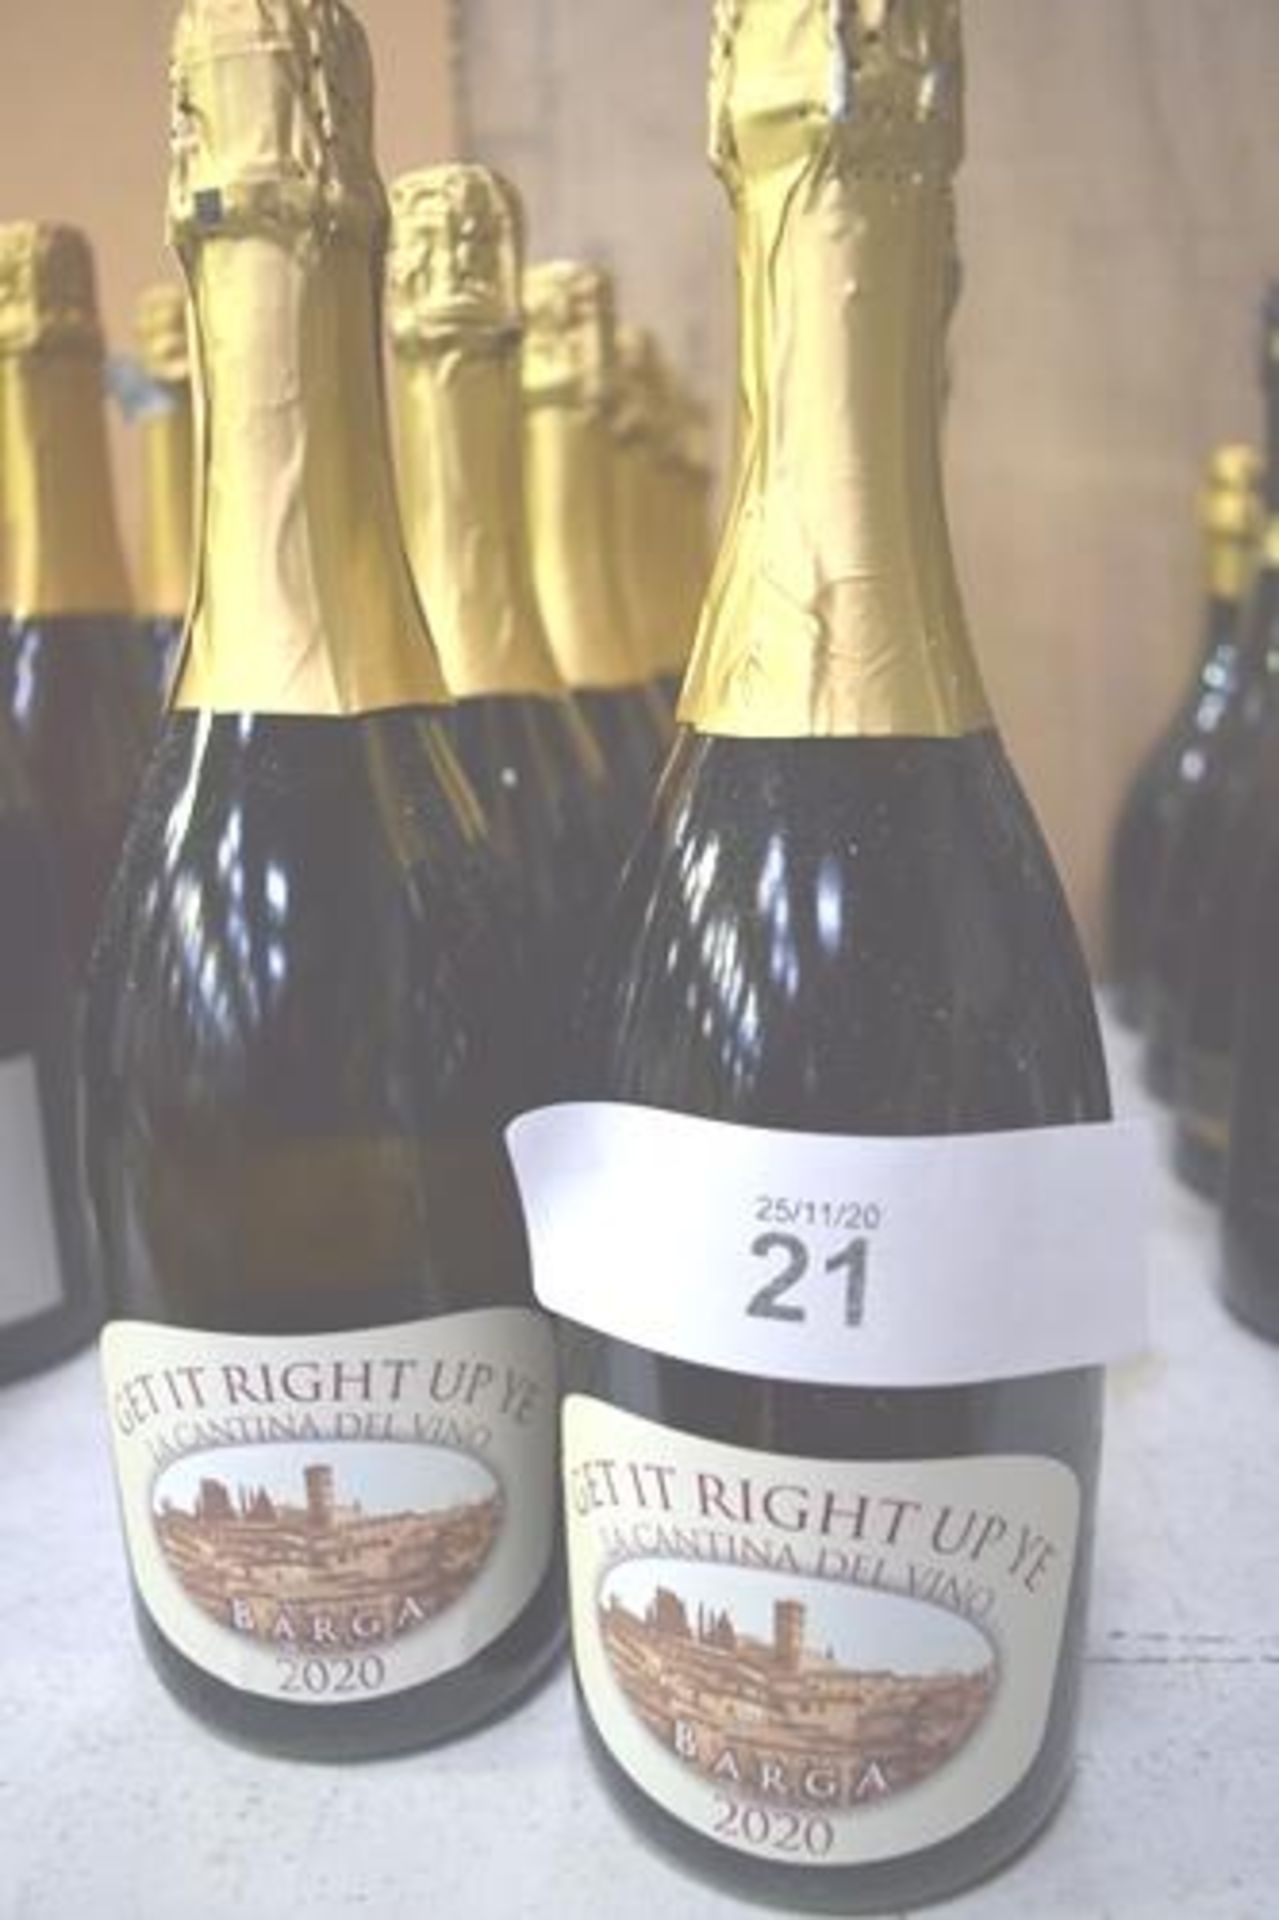 12 x 750ml bottles of Get It Right Up Ye La Cantina Del Vino Barga 2020 Prosecco (ES14)